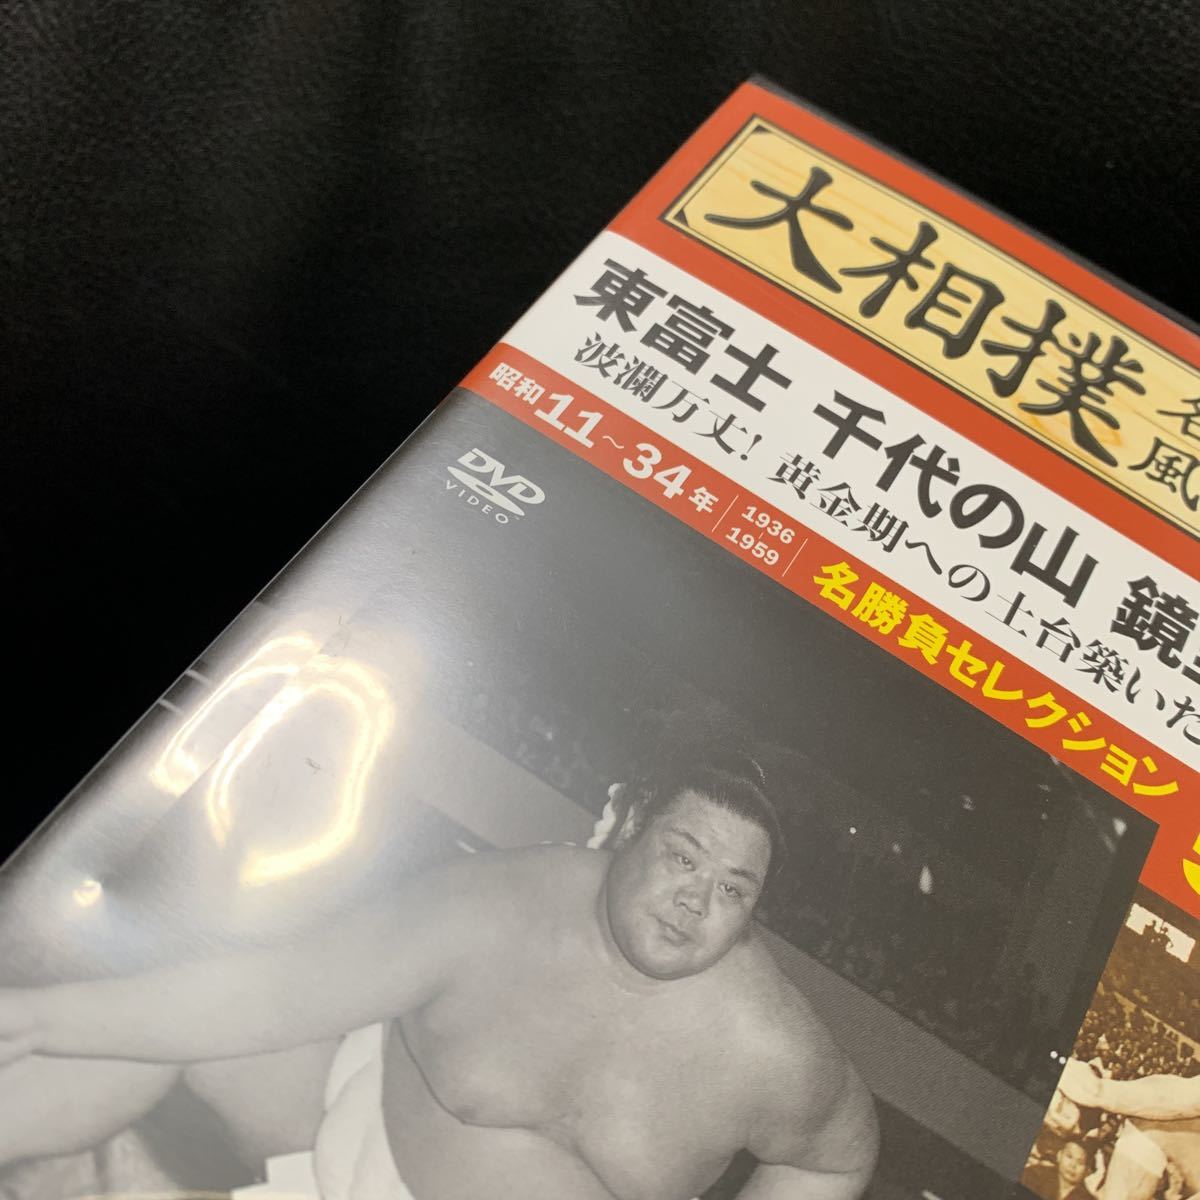 DVDマガジン 大相撲 名力士風雲録 32巻セット www.expressinter.com